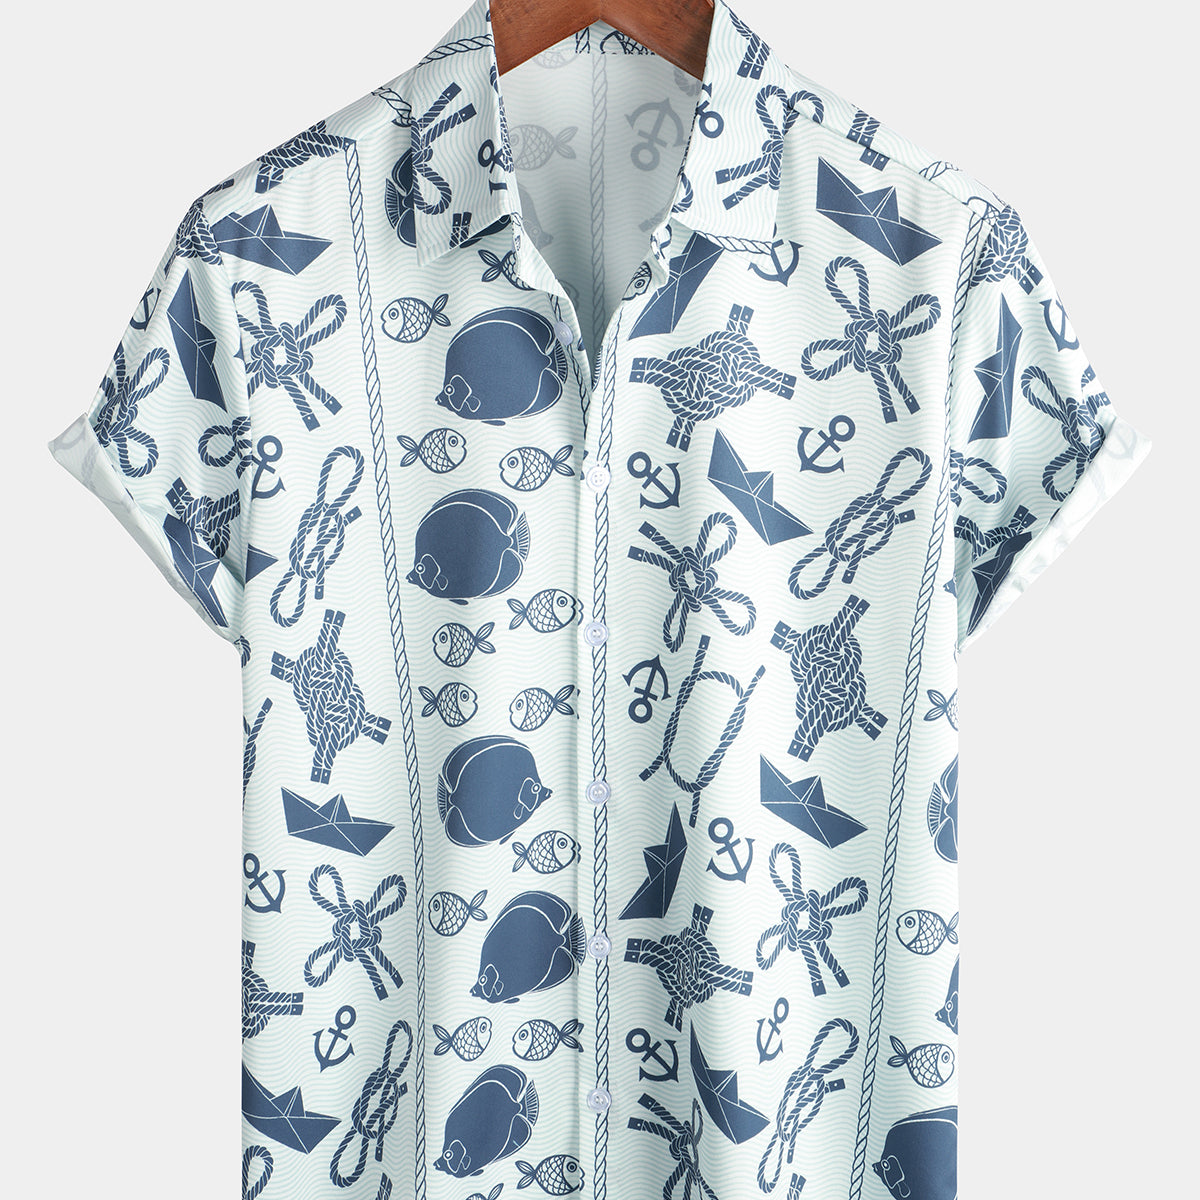 Men's Fish Print Aloha Beach Short Sleeve Button Up Hawaiian Shirt